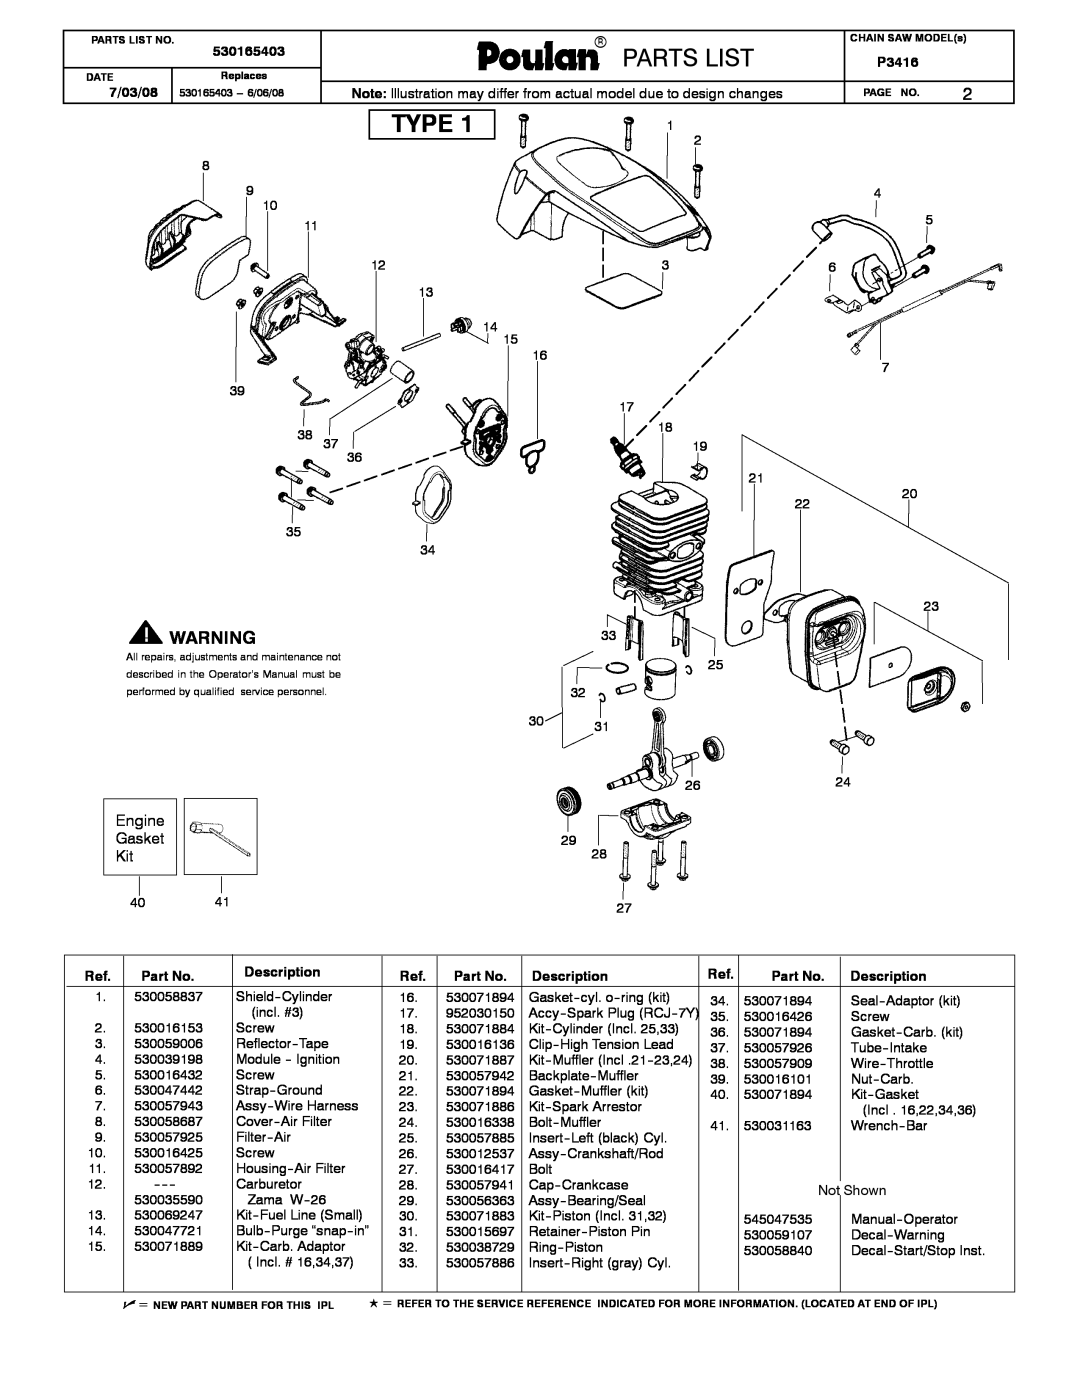 Poulan 530165403 manual Type, Engine Gasket Kit, WEED EATERRr, Partslist, Paramoupoulant, P3416, Description 